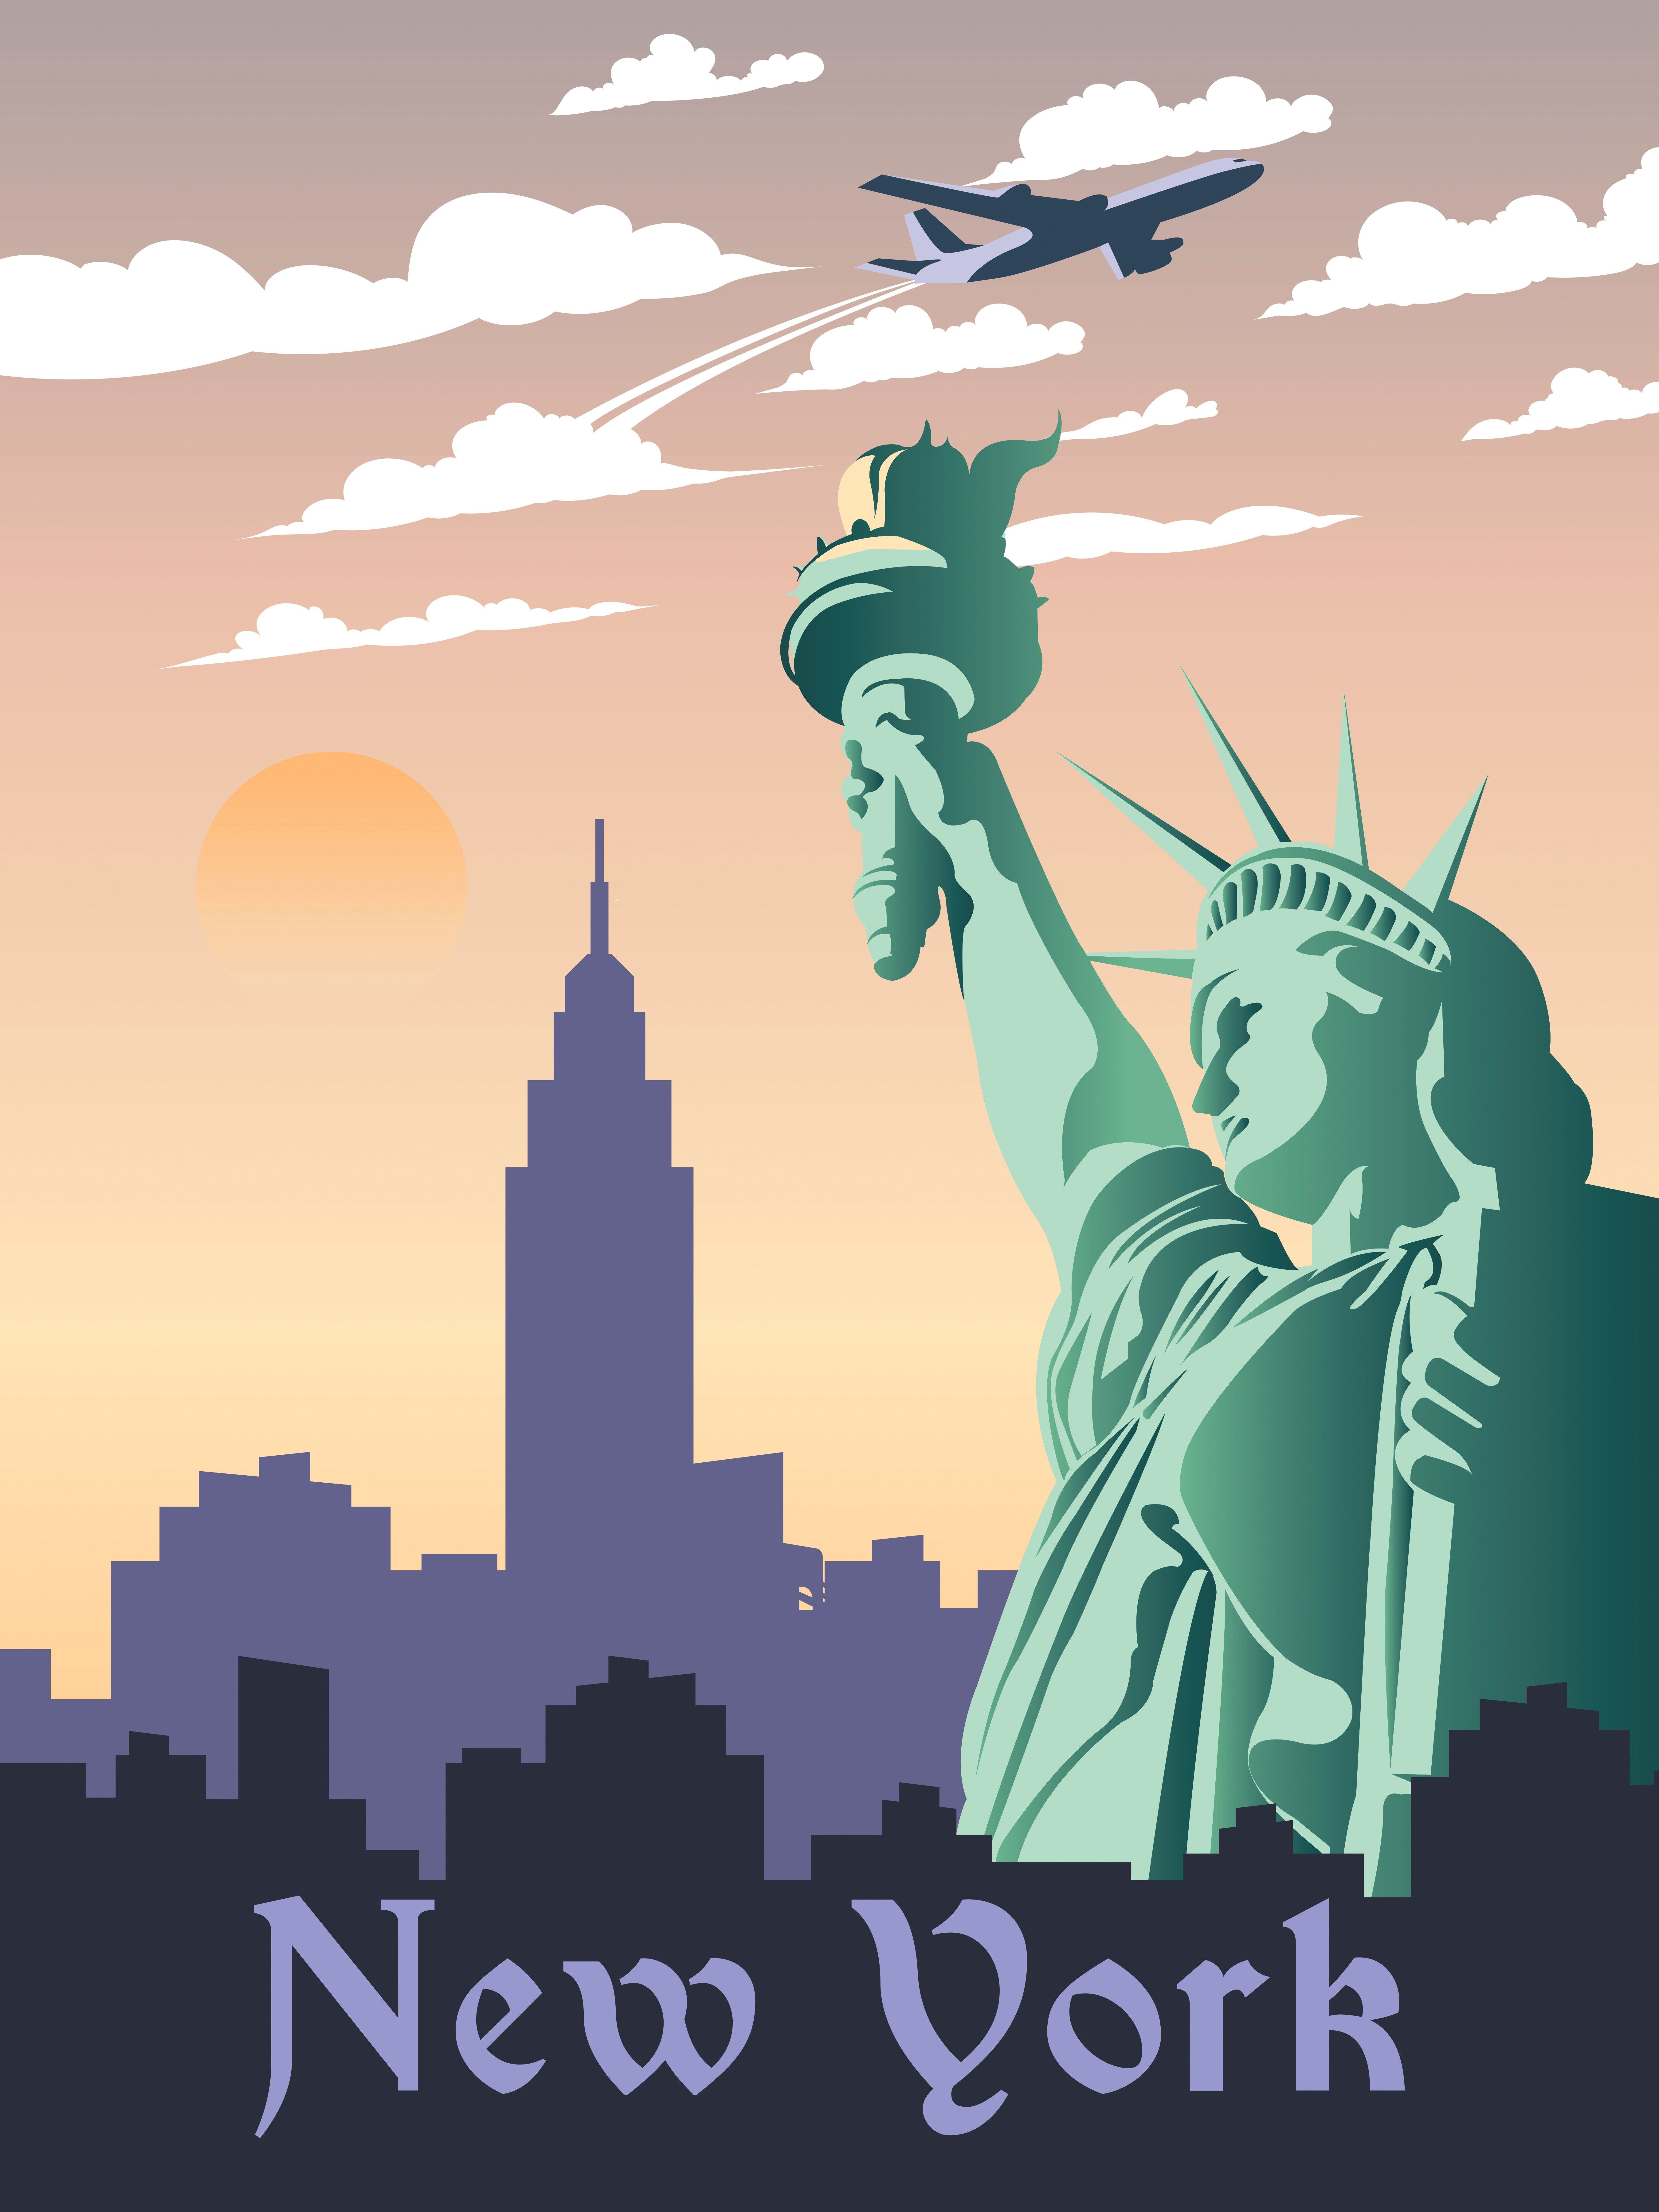 Retro New York Travel Poster by LiquidSoulDesign